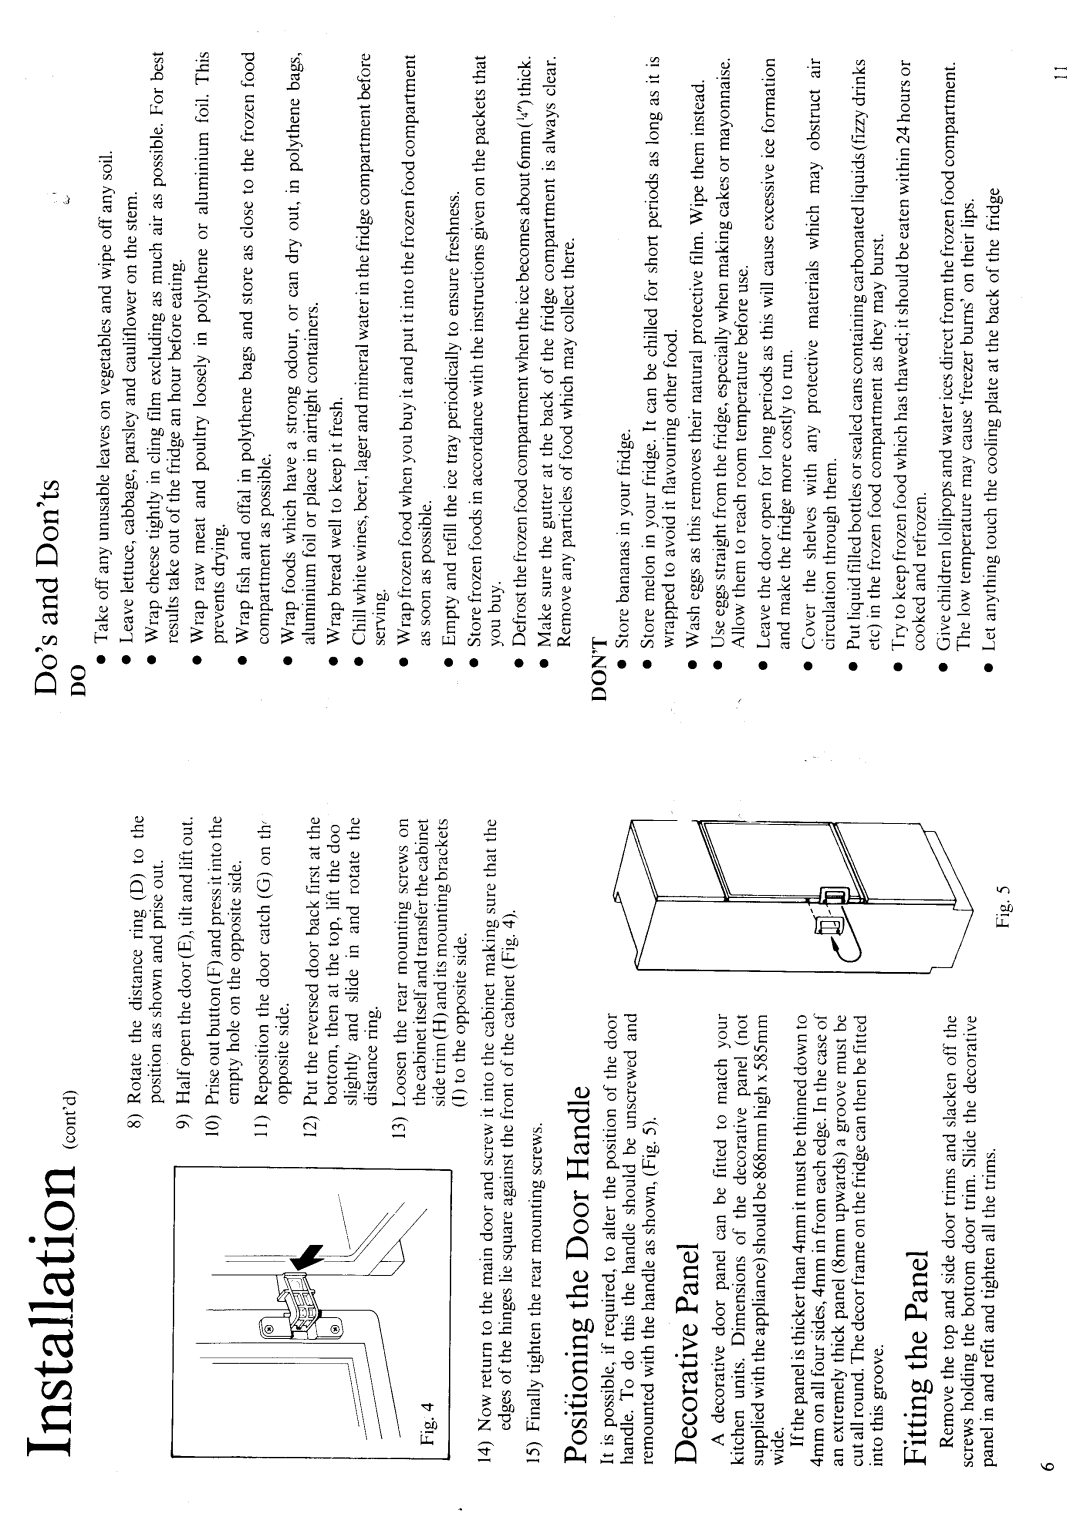 Hotpoint 6980 manual 